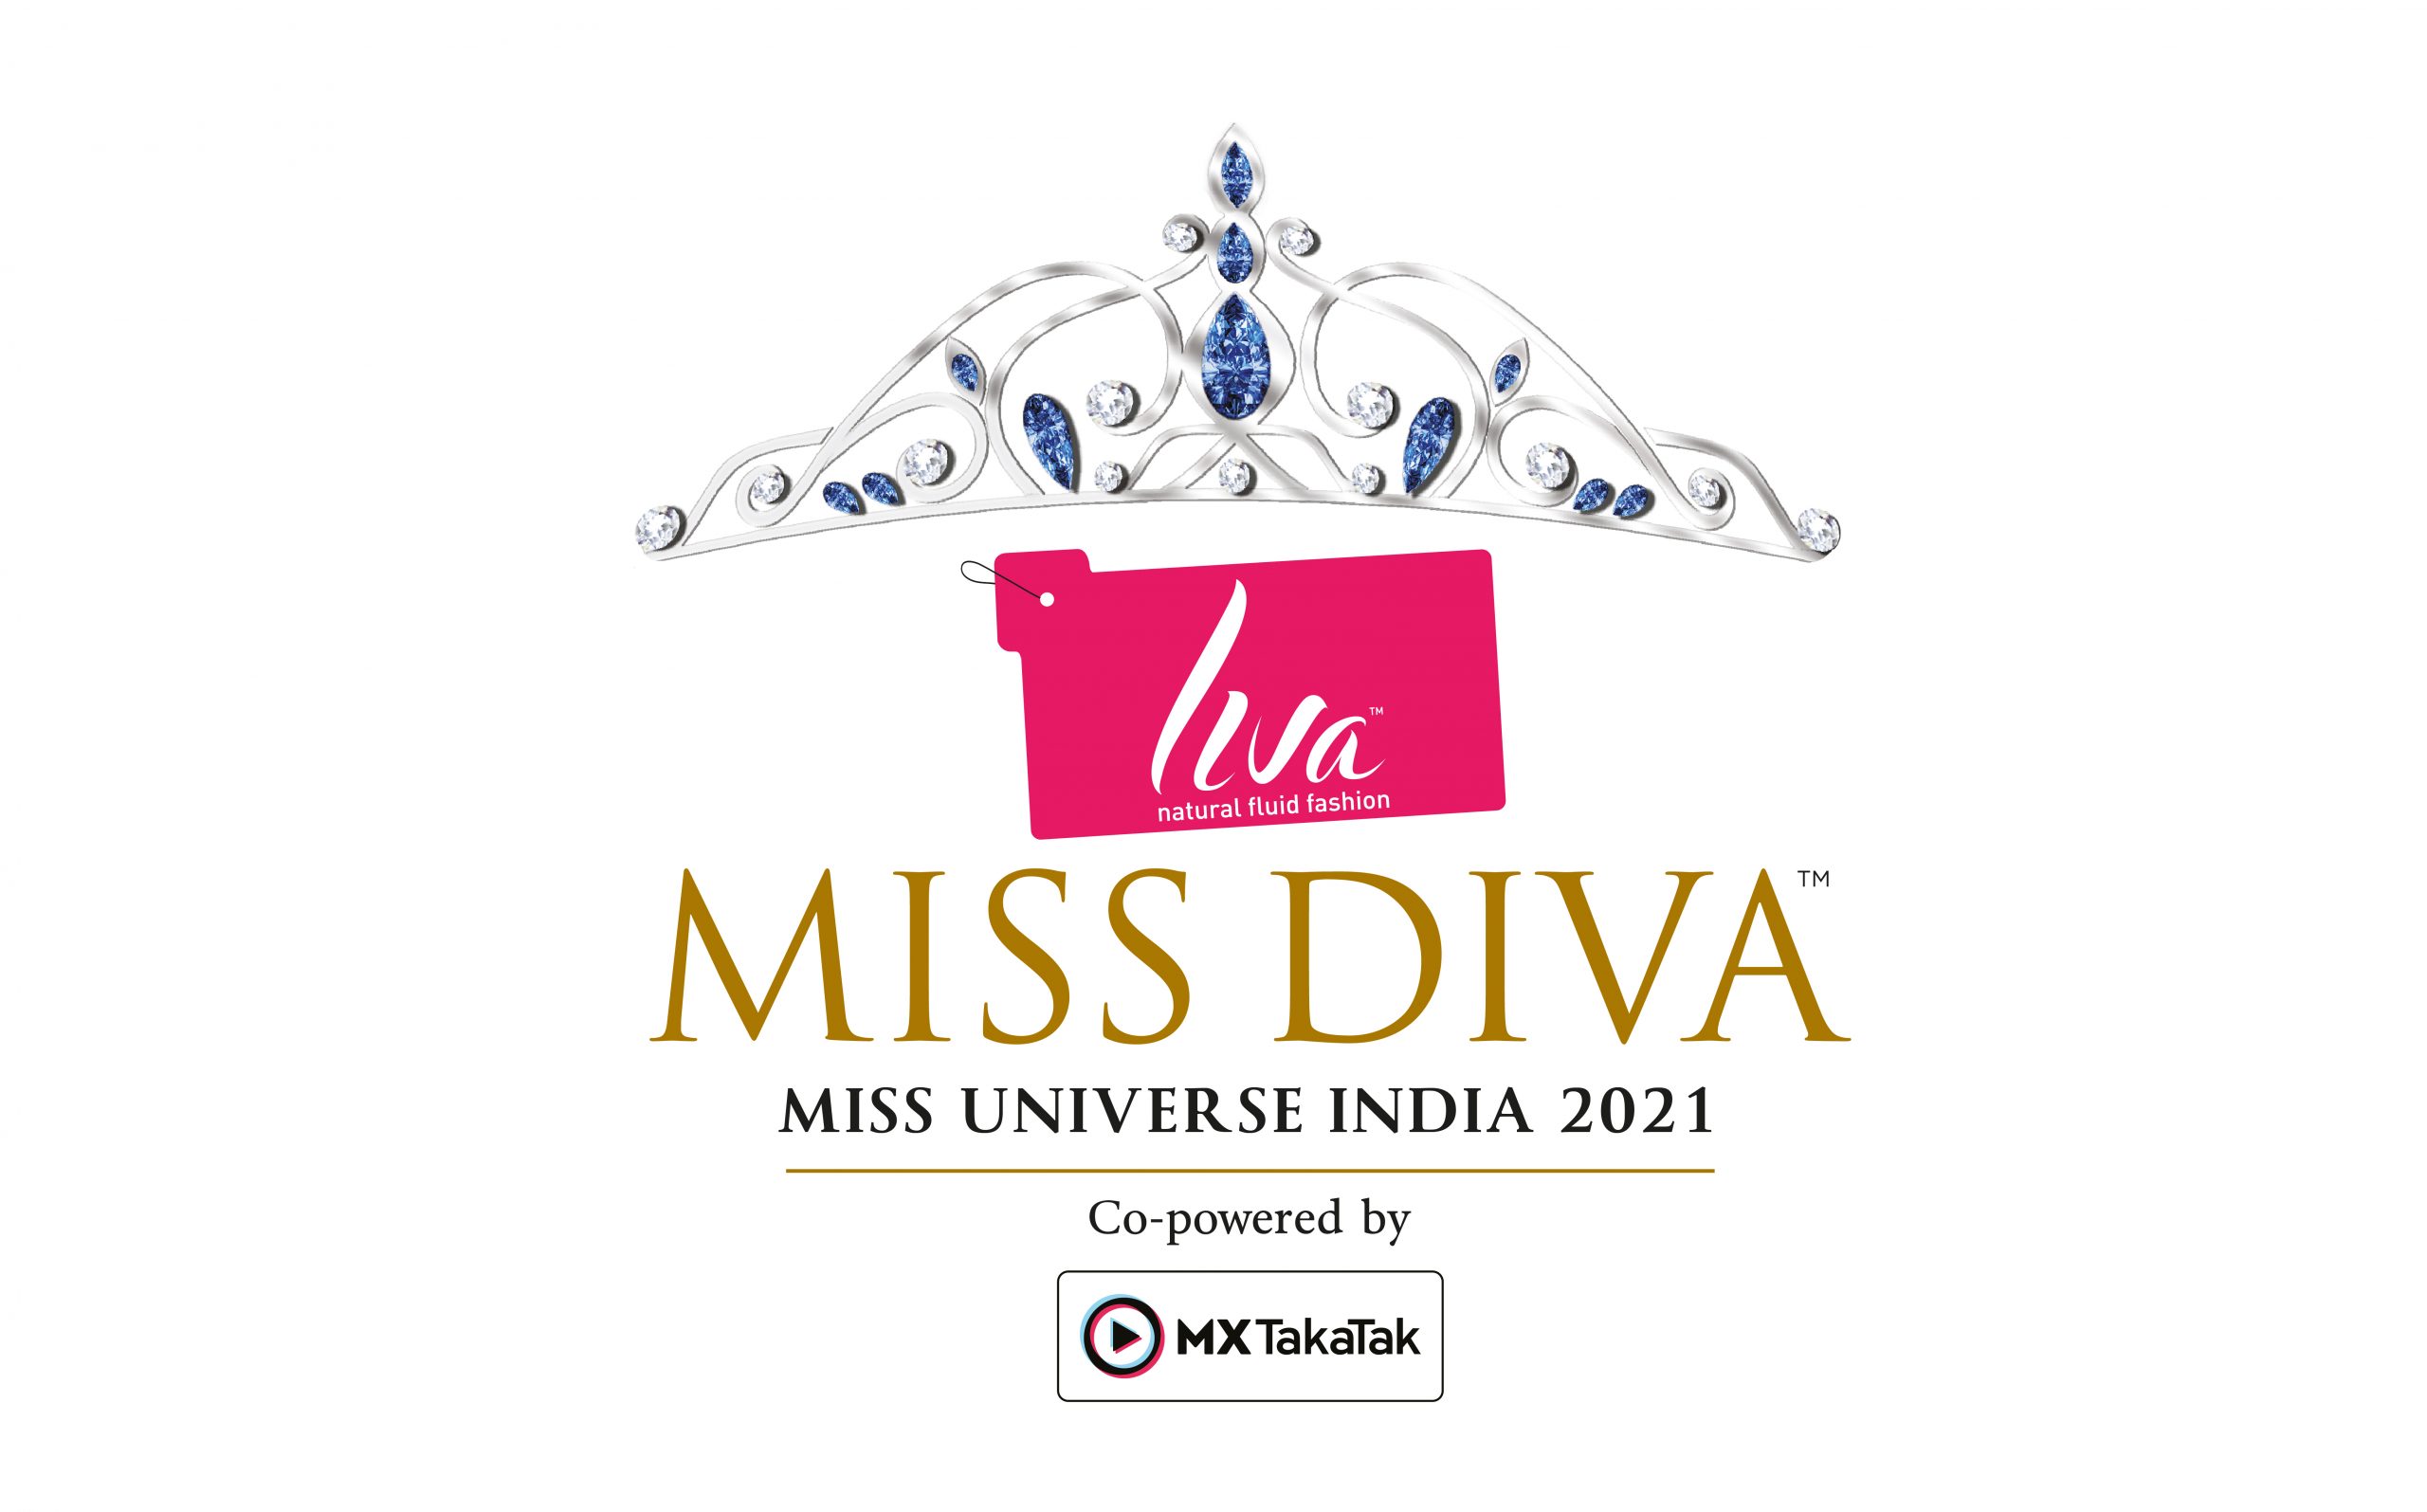 LIVA Miss Diva 2021 goes digital